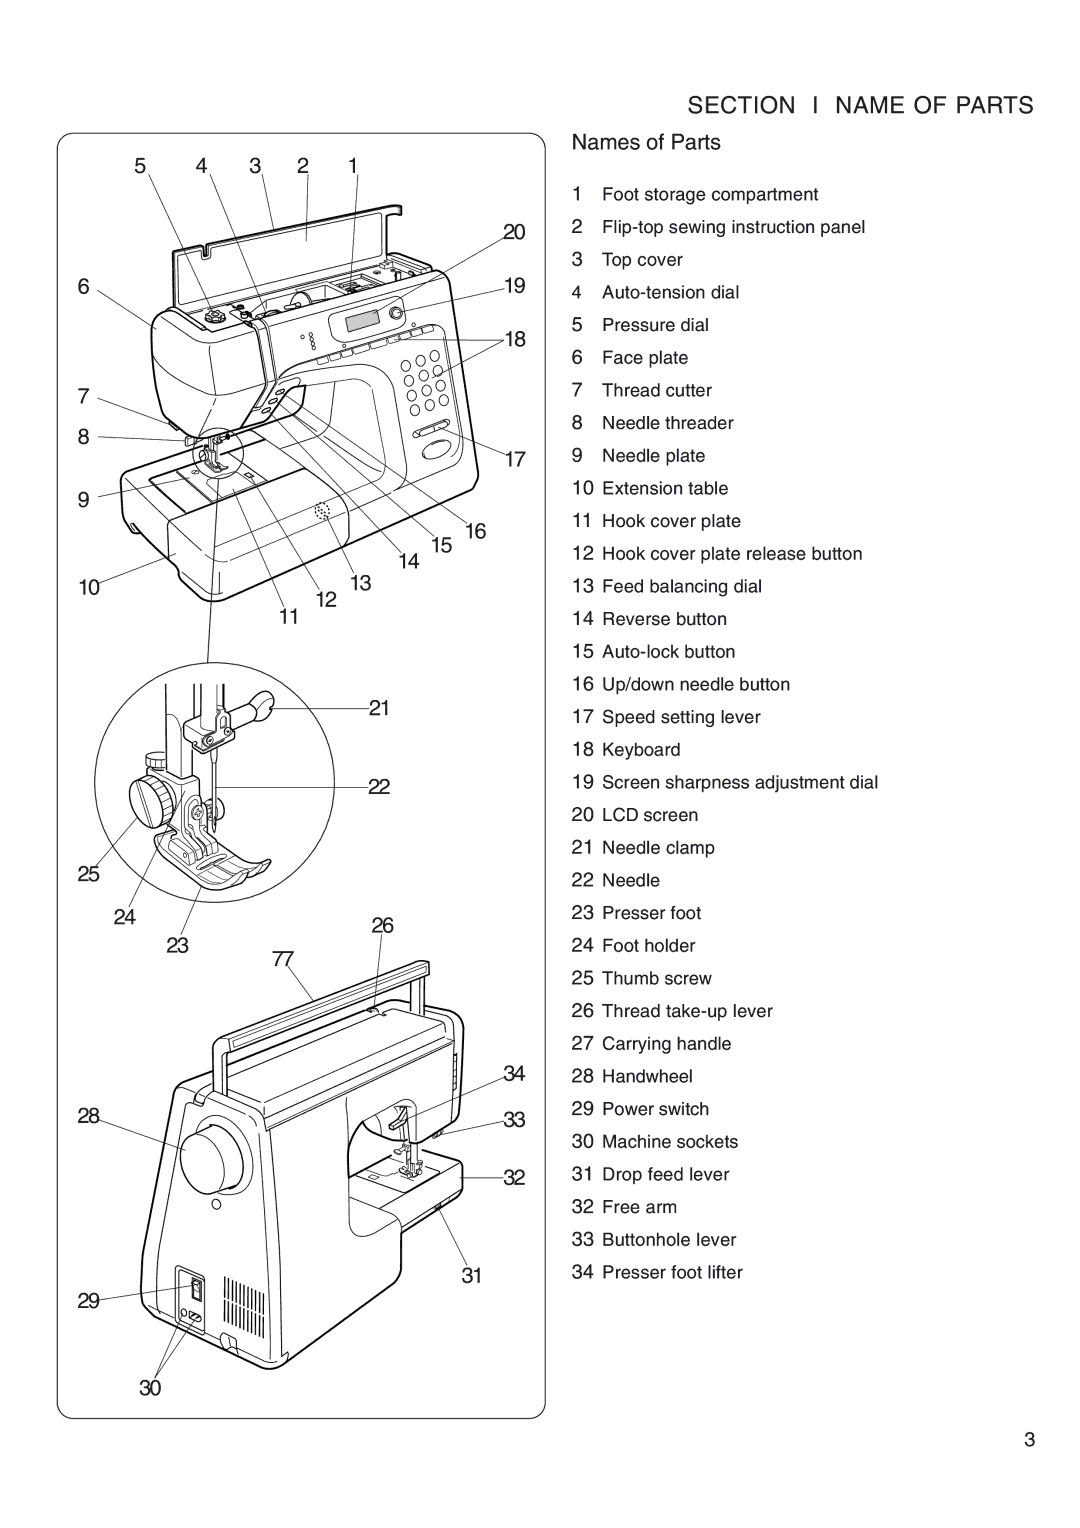 Janome 4800 manual 3 2, Names of Parts, 2426 